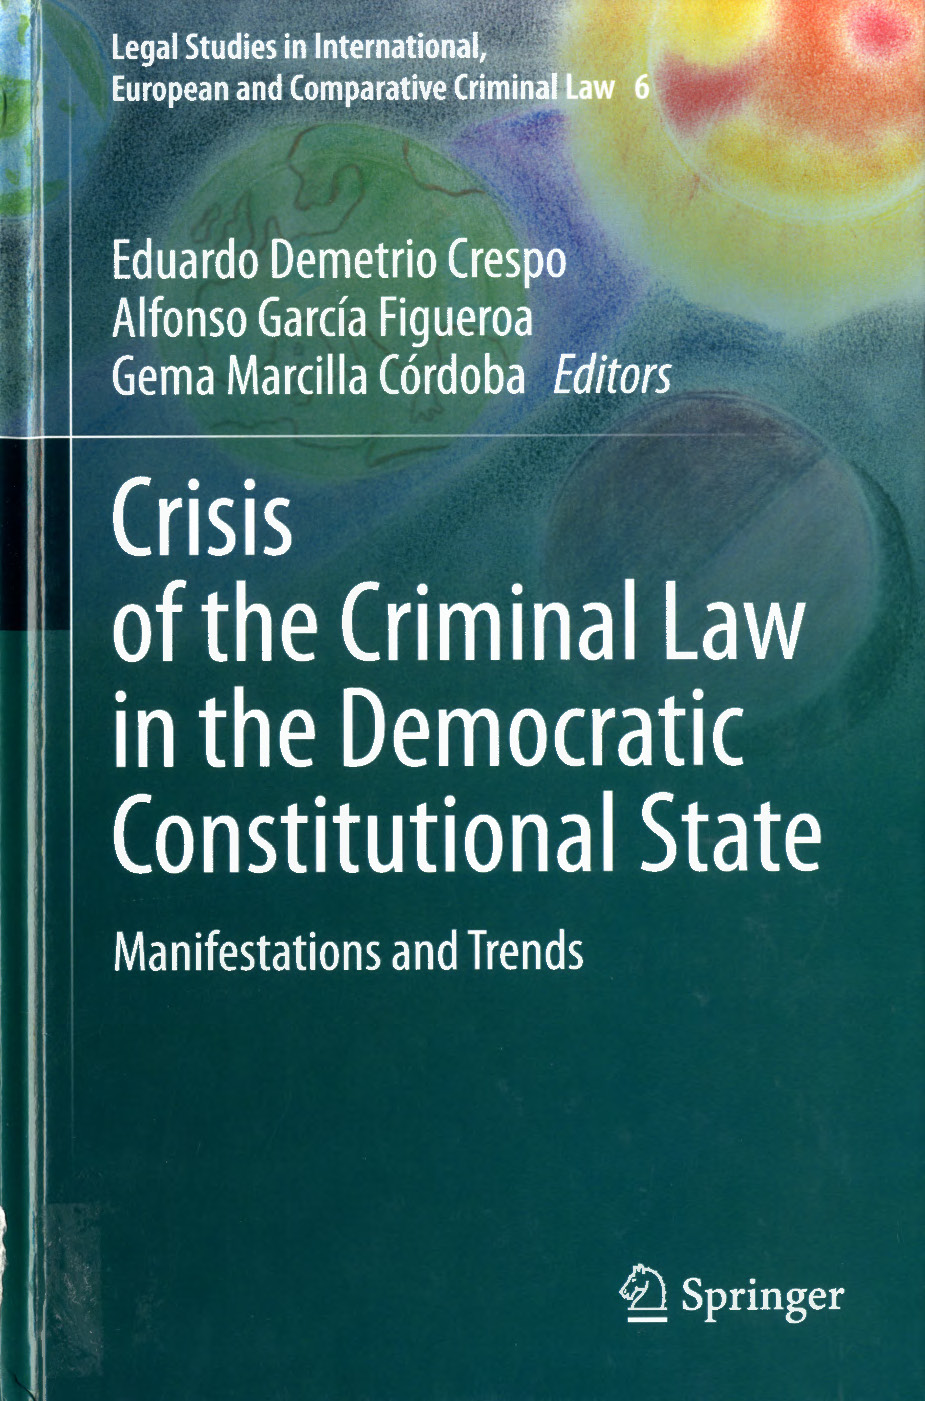 Imagen de portada del libro Crisis of the Criminal Lawin the Democratic Constitutional State